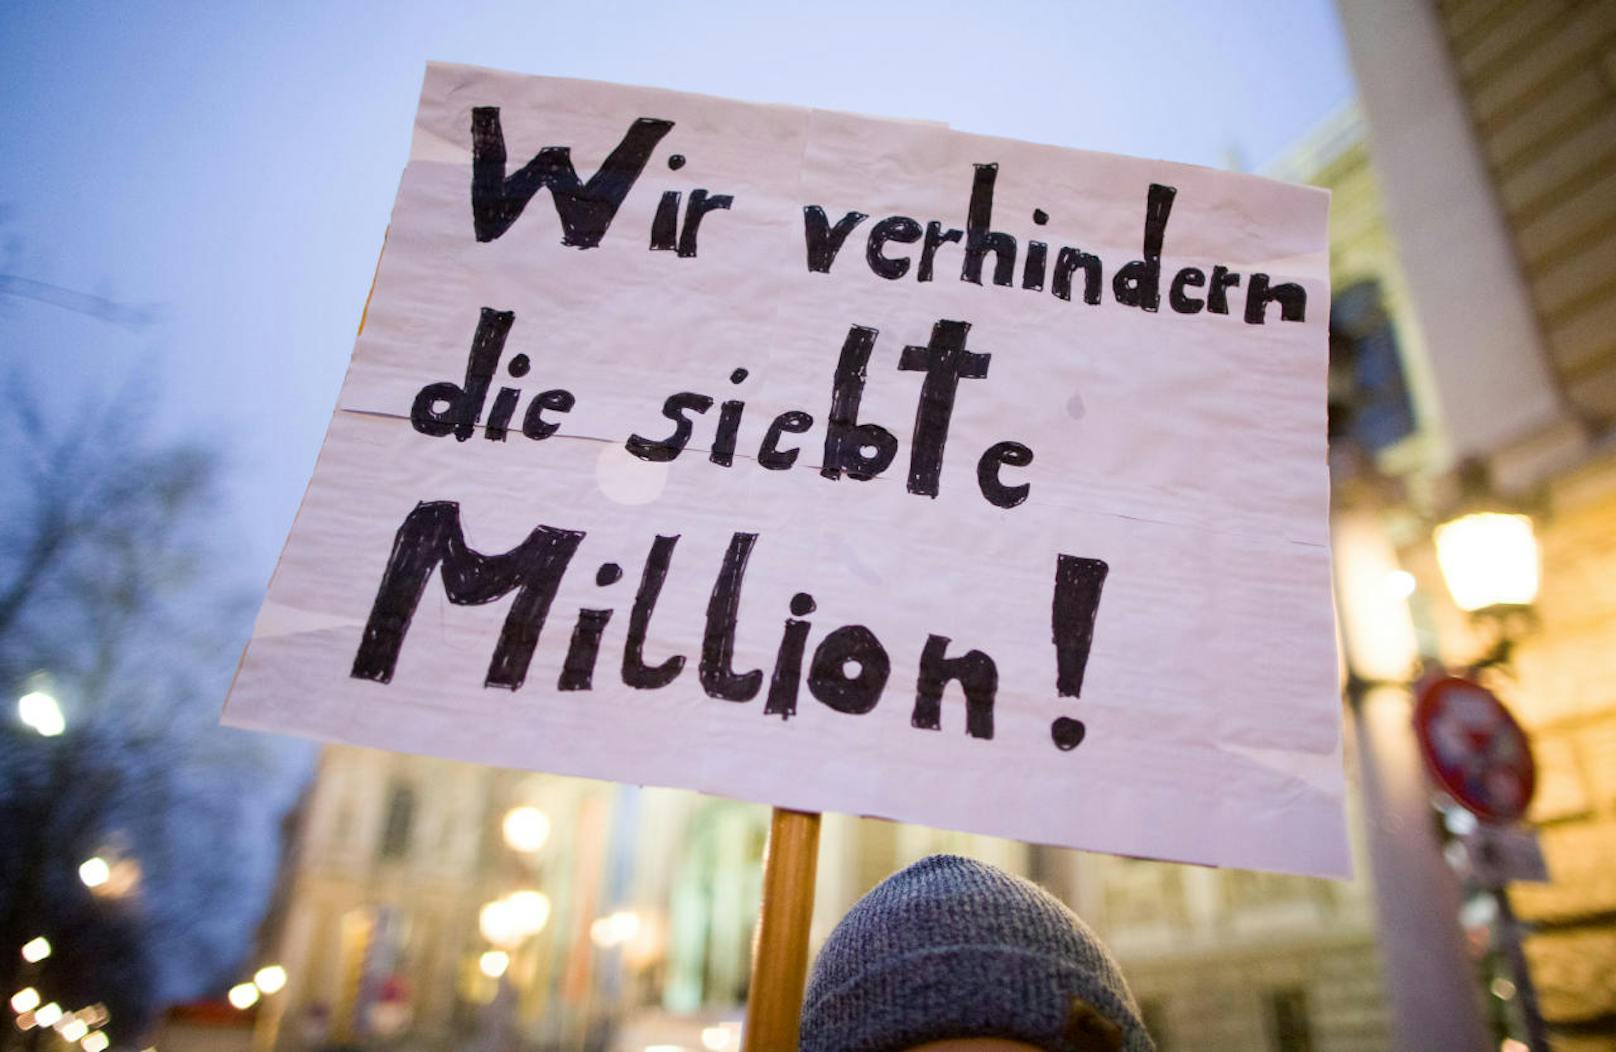 Demonstrationen gegen den Akademikerball in Wien am 26. Jänner 2018.